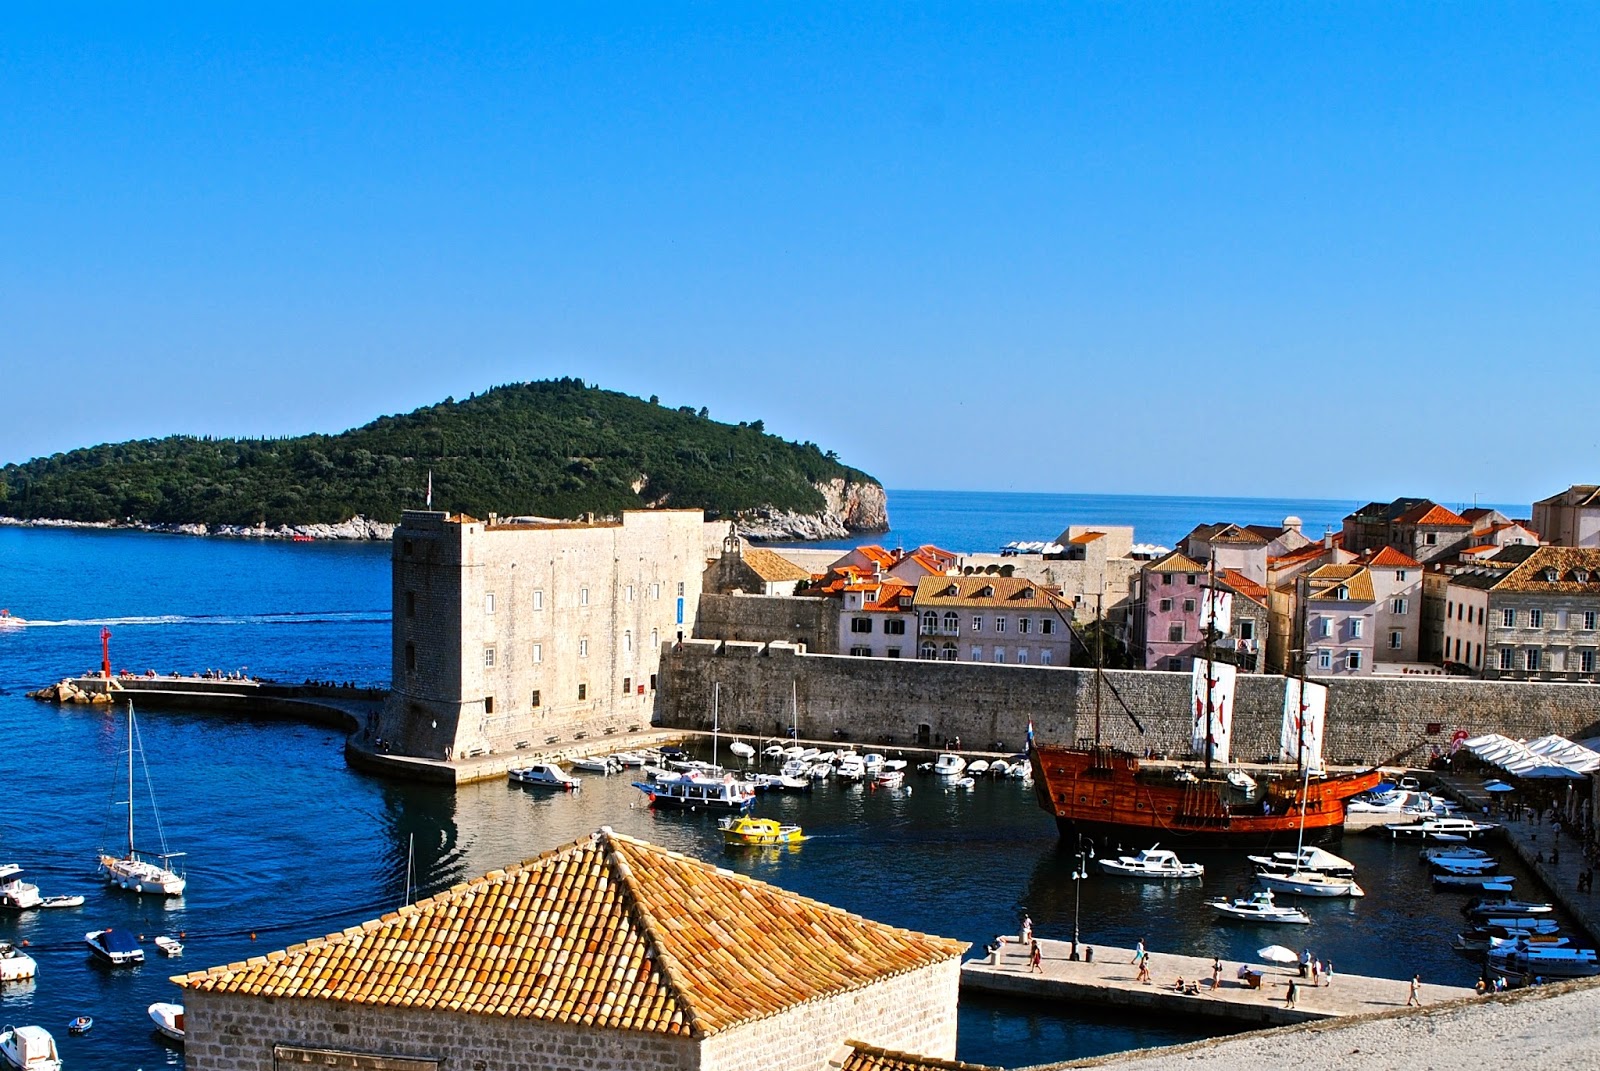 Views walking the old town walls in Dubrovnik Croatia